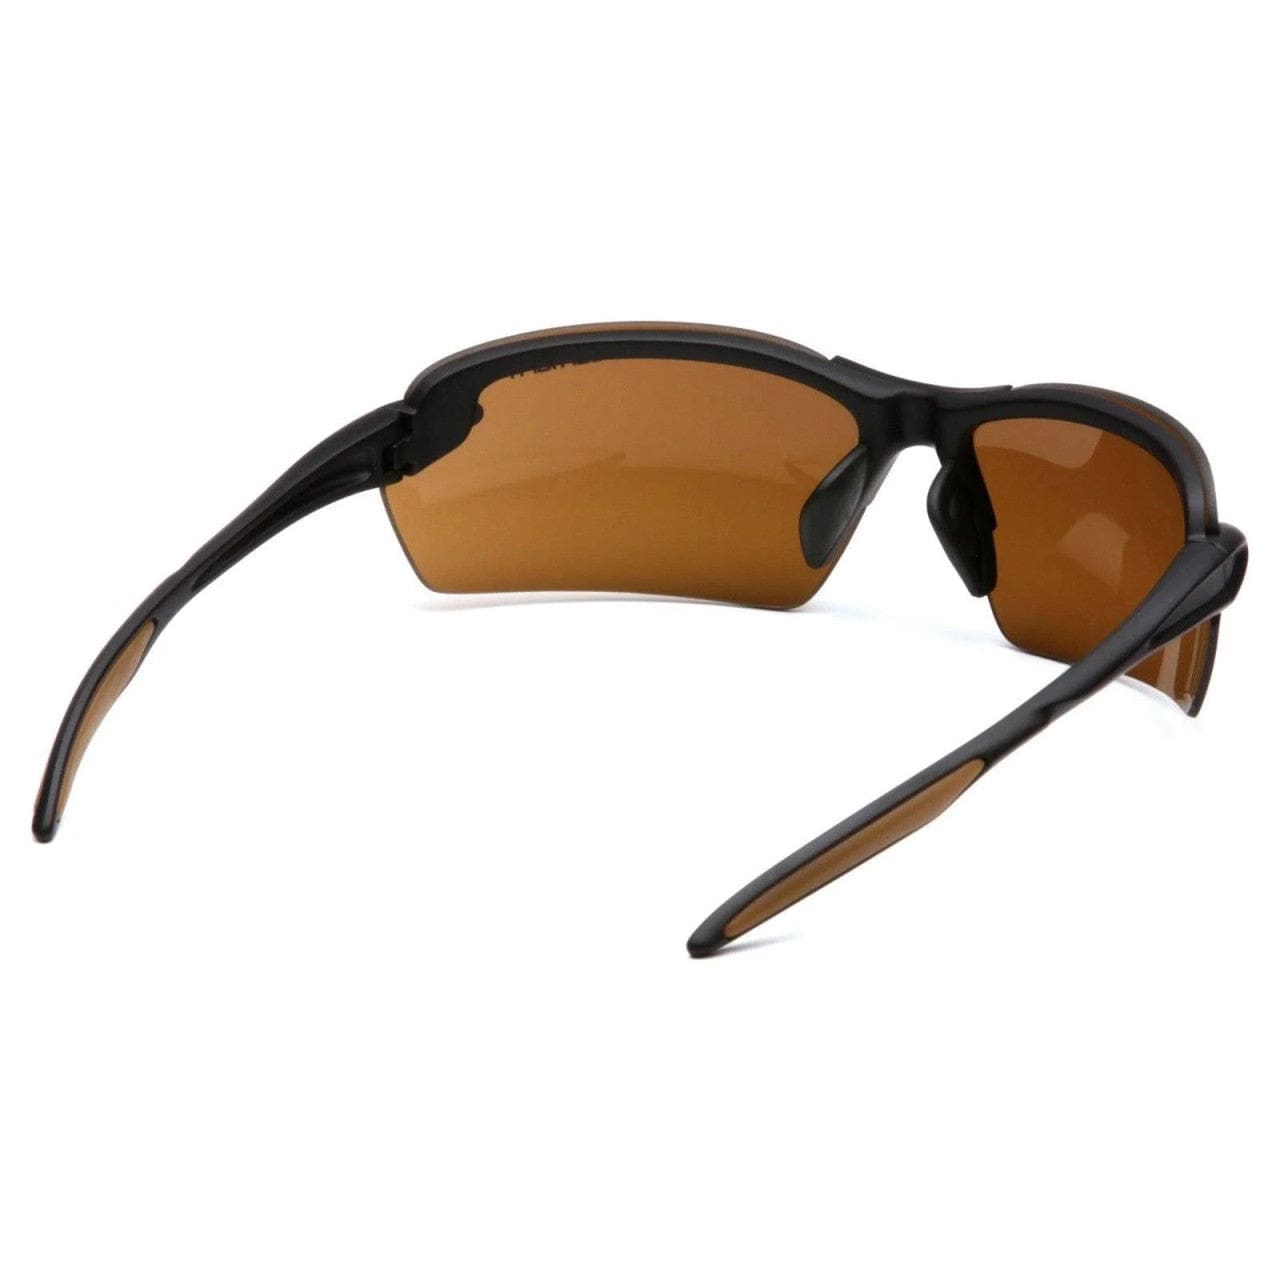 Carhartt Spokane Safety Glasses with Black Frame and Sandstone Bronze Lens CHB318D Inside